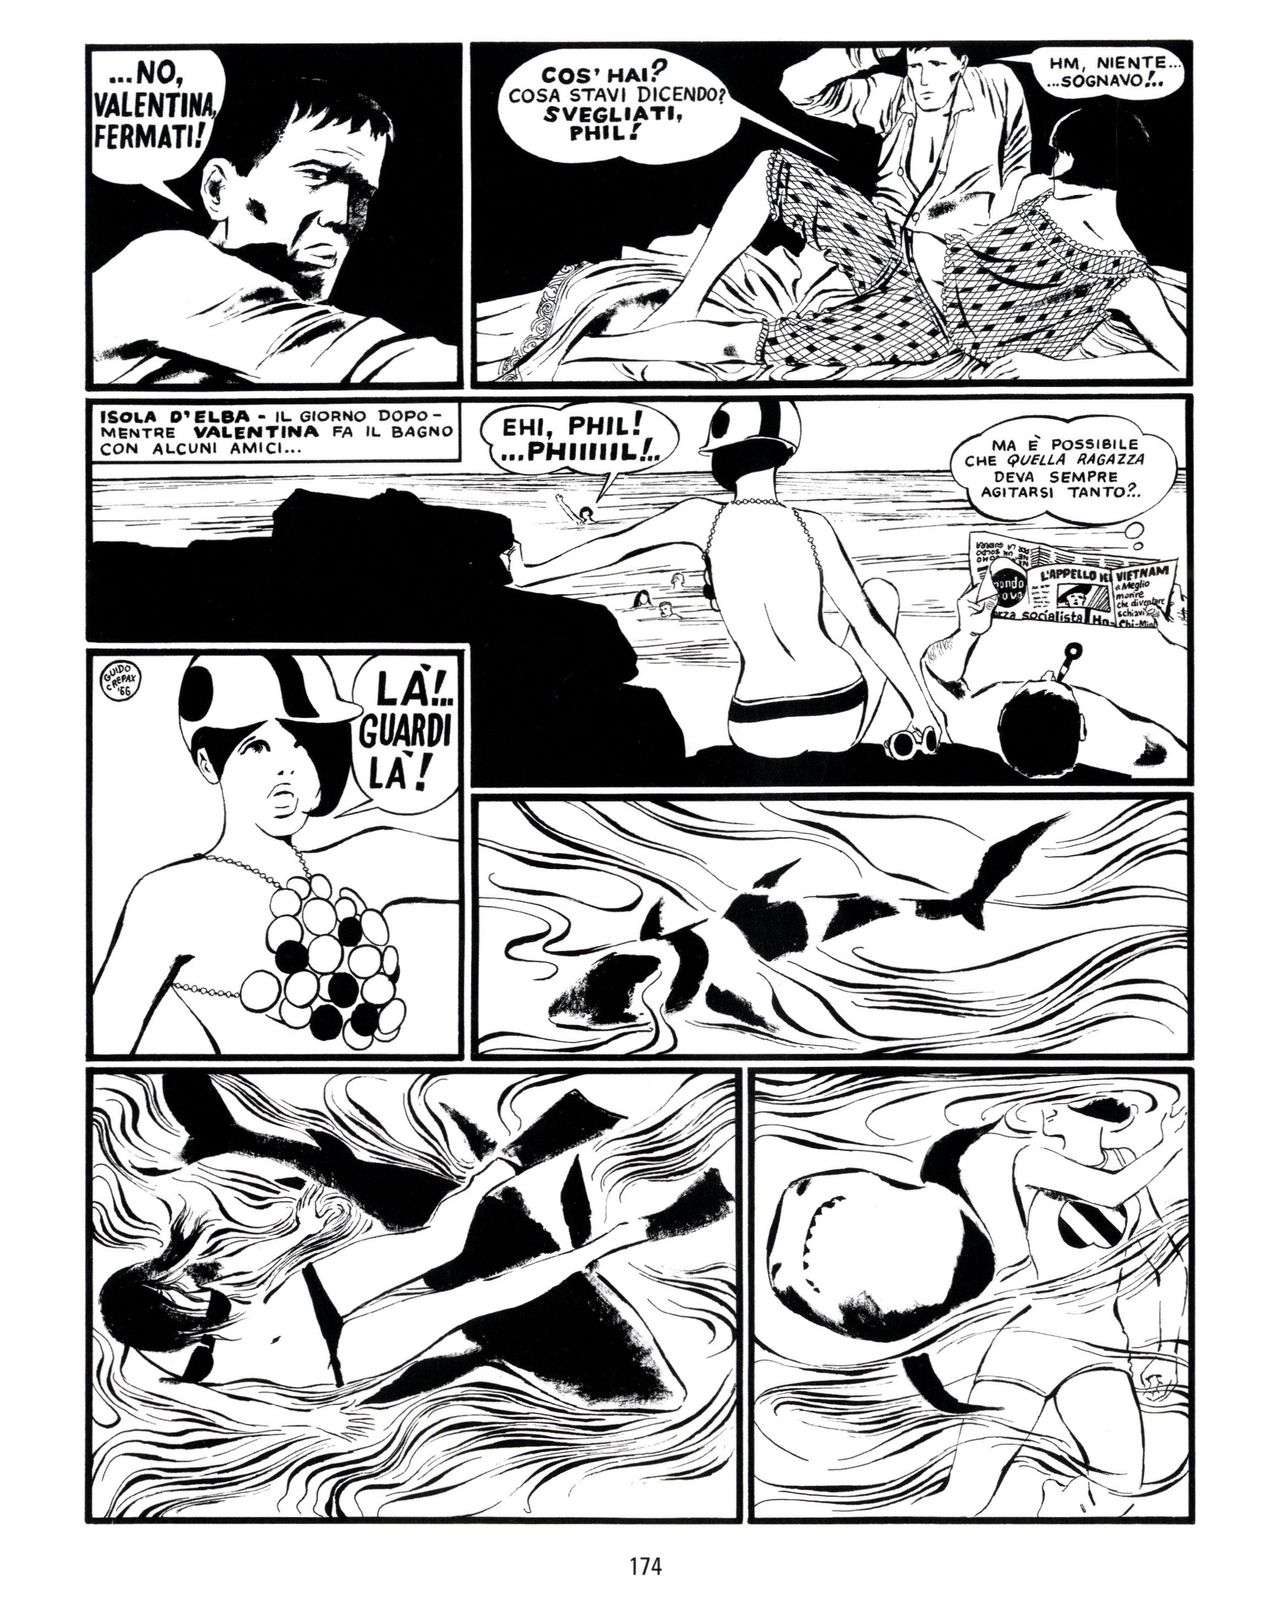 [Guido Crepax] Erotica Fumetti #25 : L'ascesa dei sotterranei : I cavalieri ciechi [Italian] 175